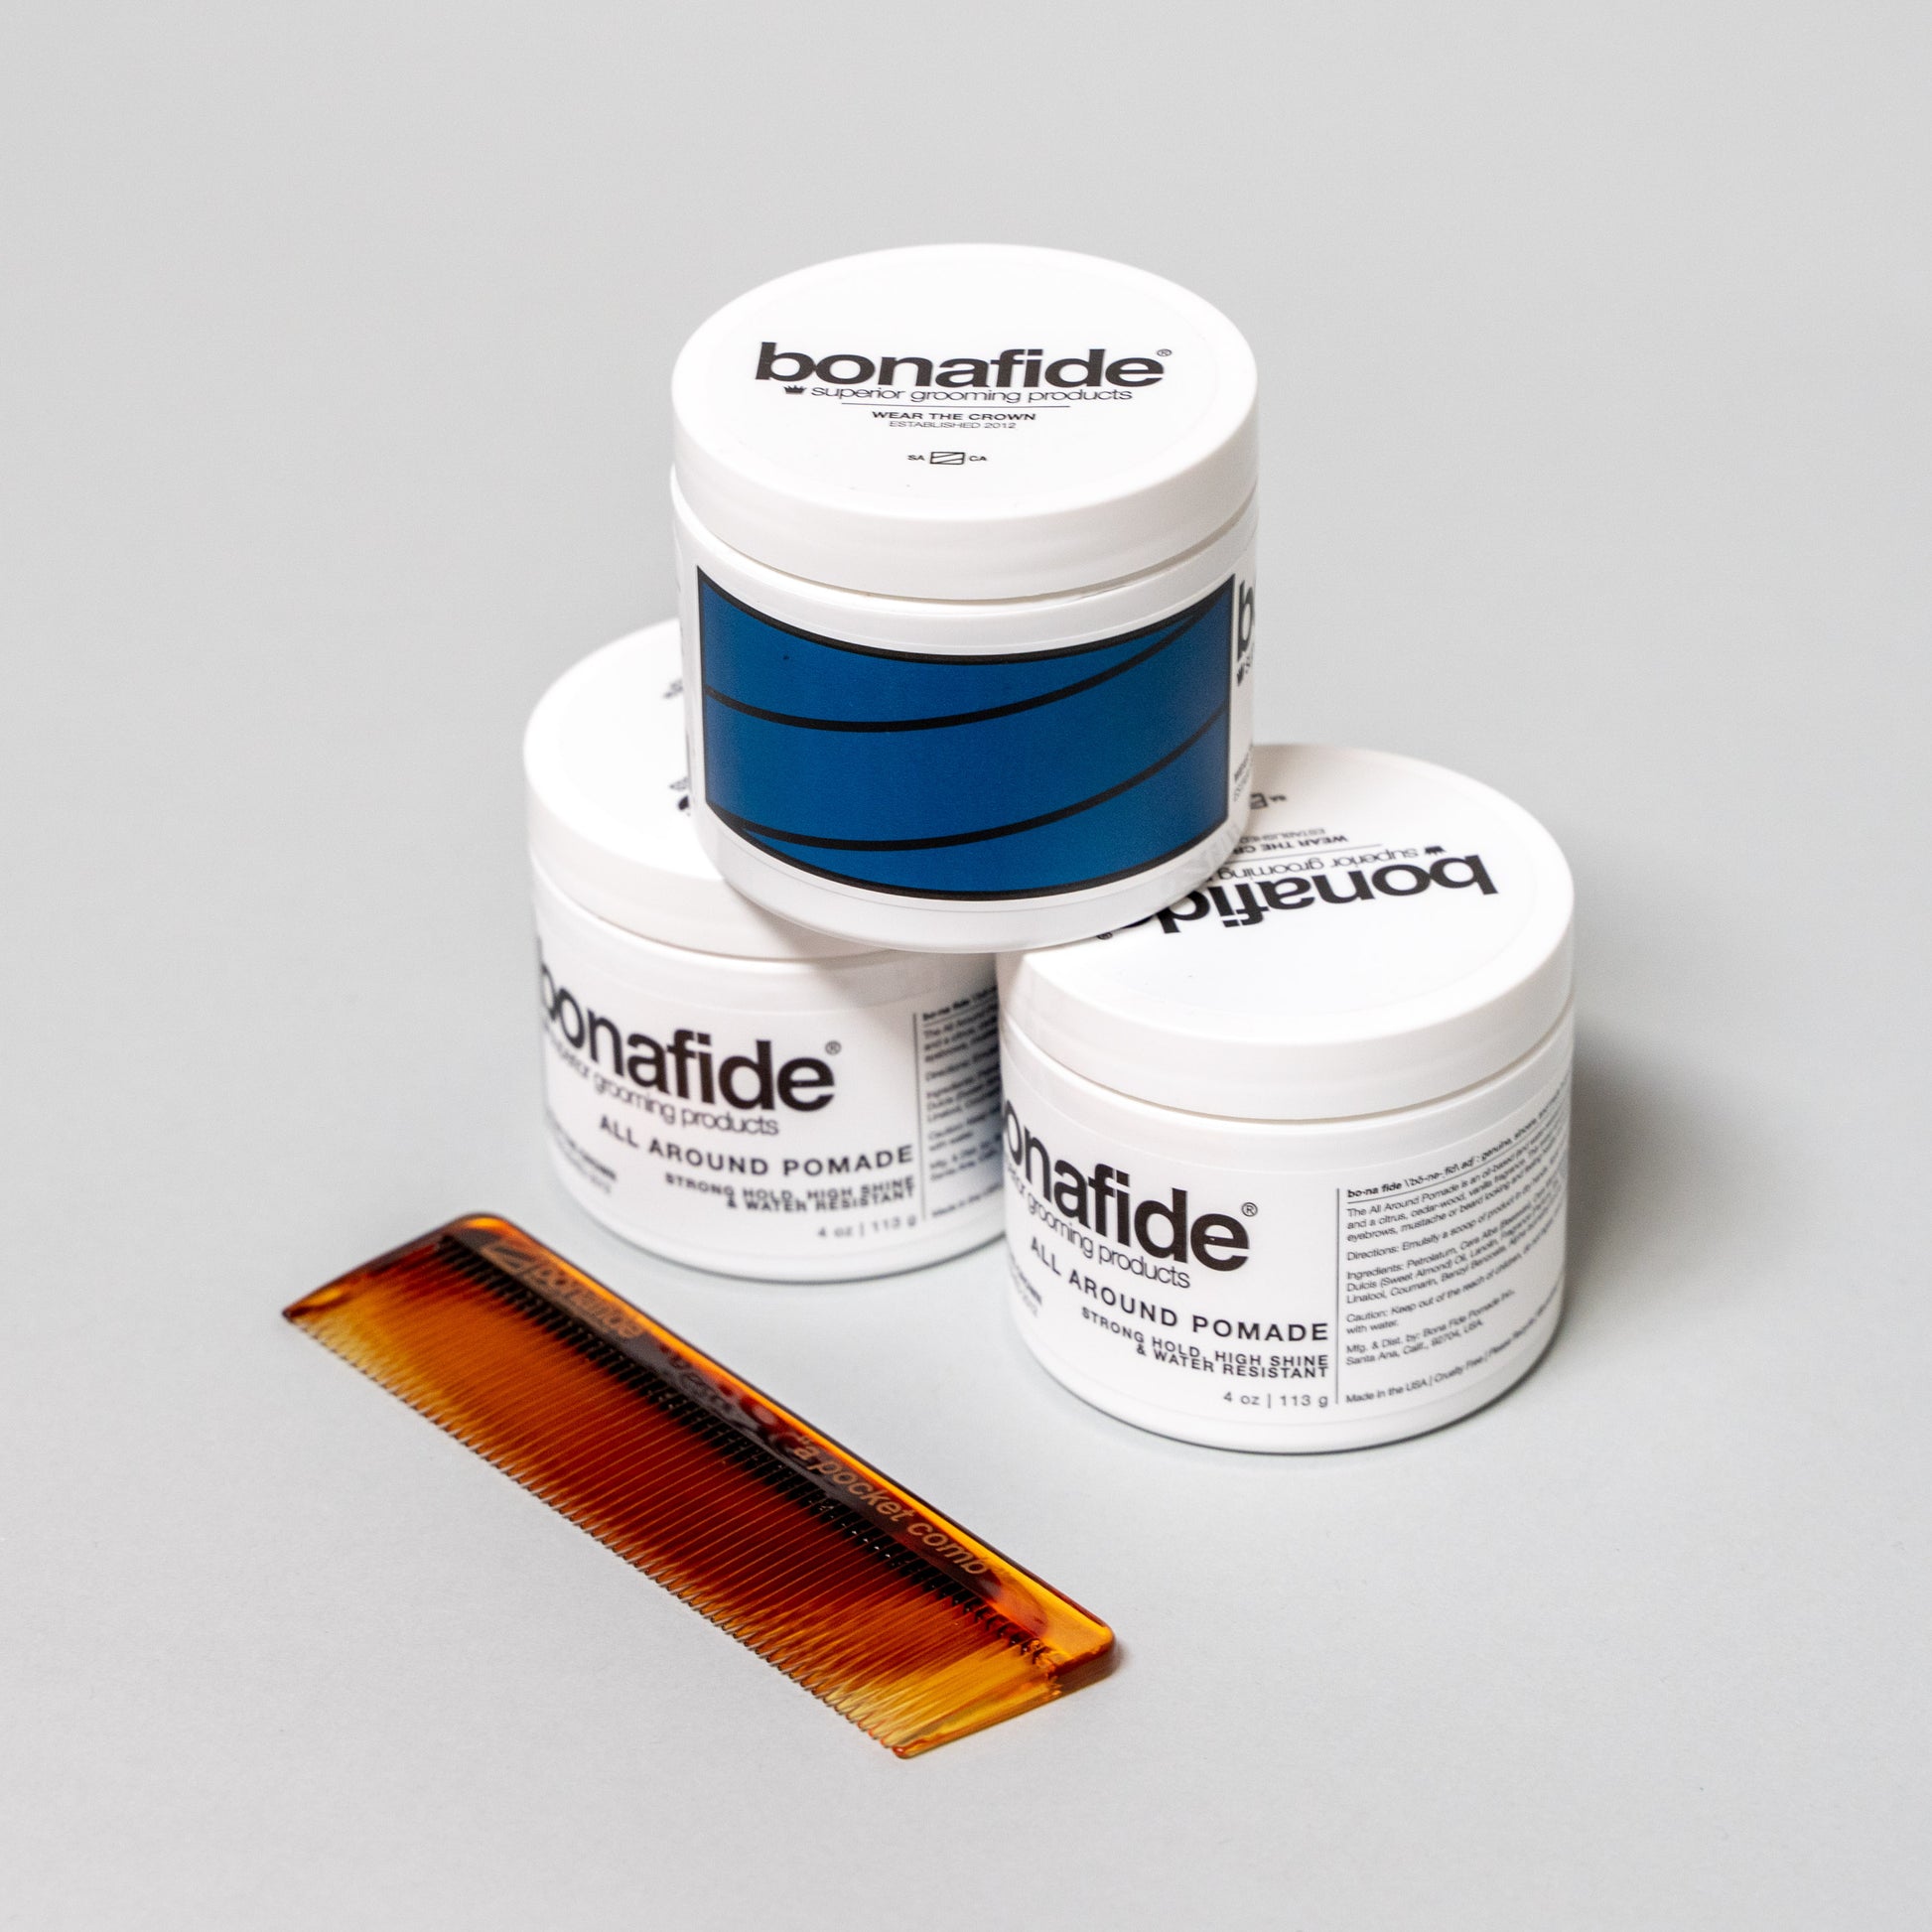 Bona Fide Superior Grooming Products Since 2012 – Bona Fide Pomade